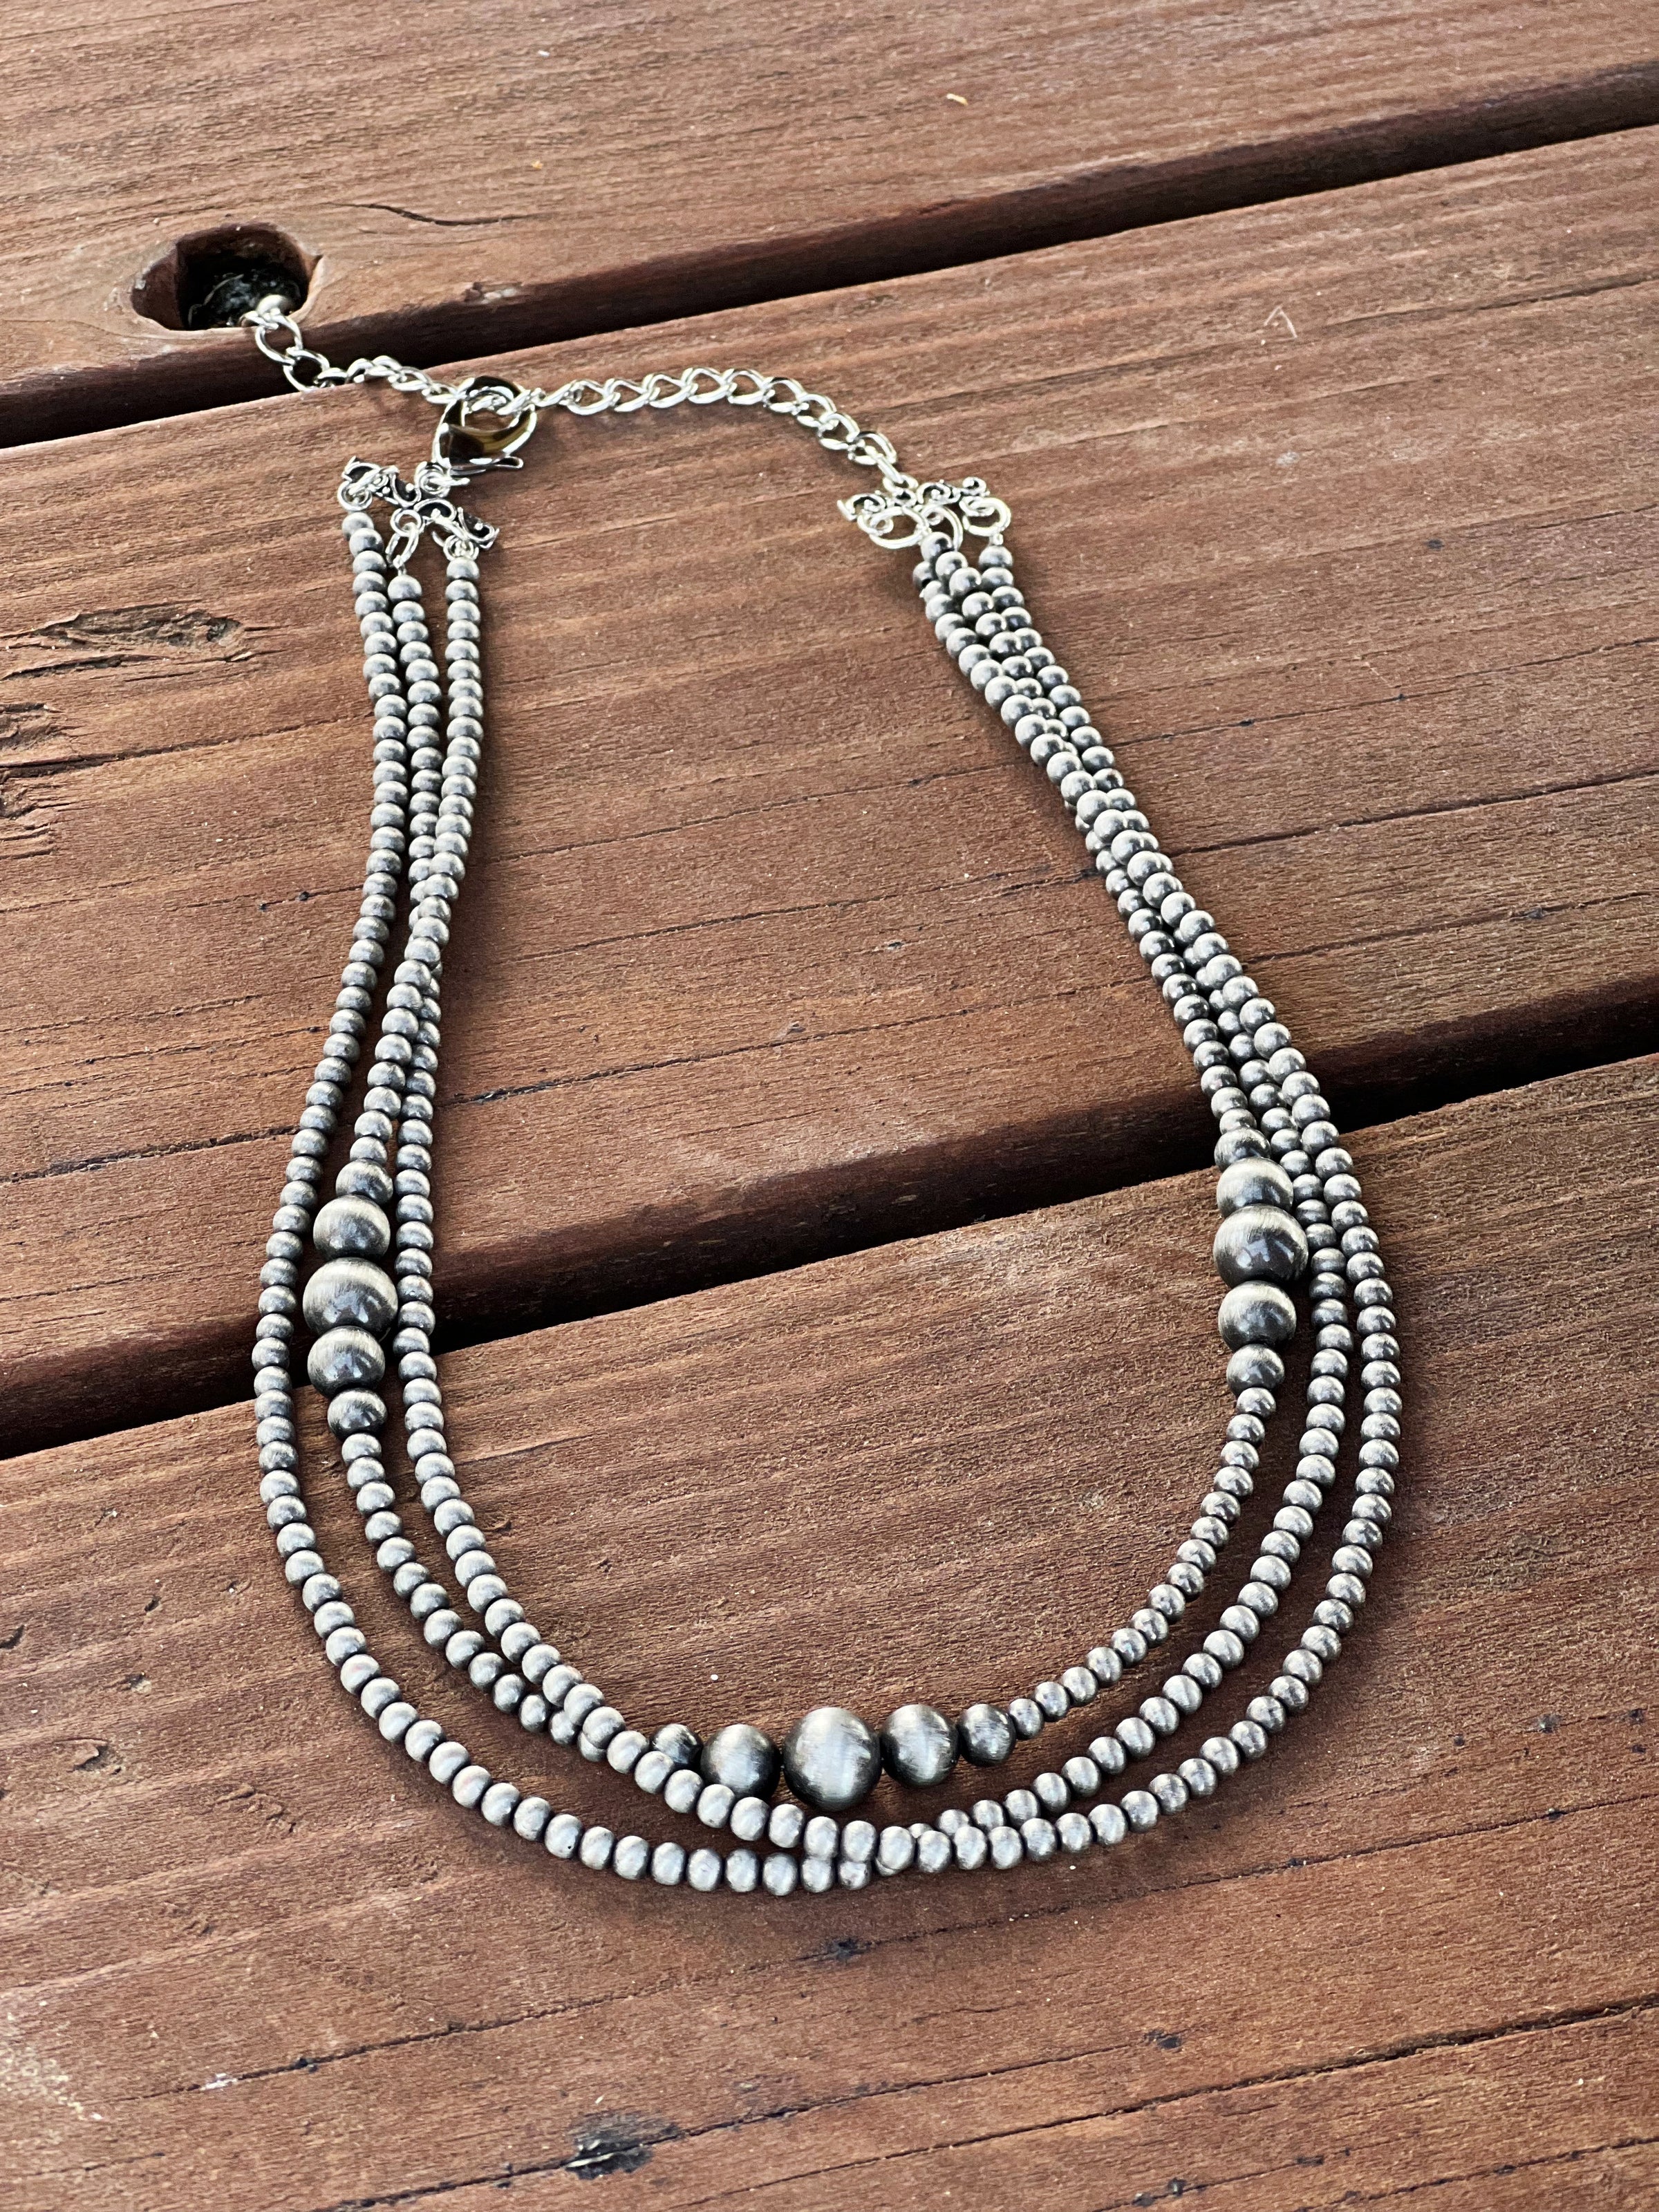 The Multi Strand Navajo Pearl Necklace